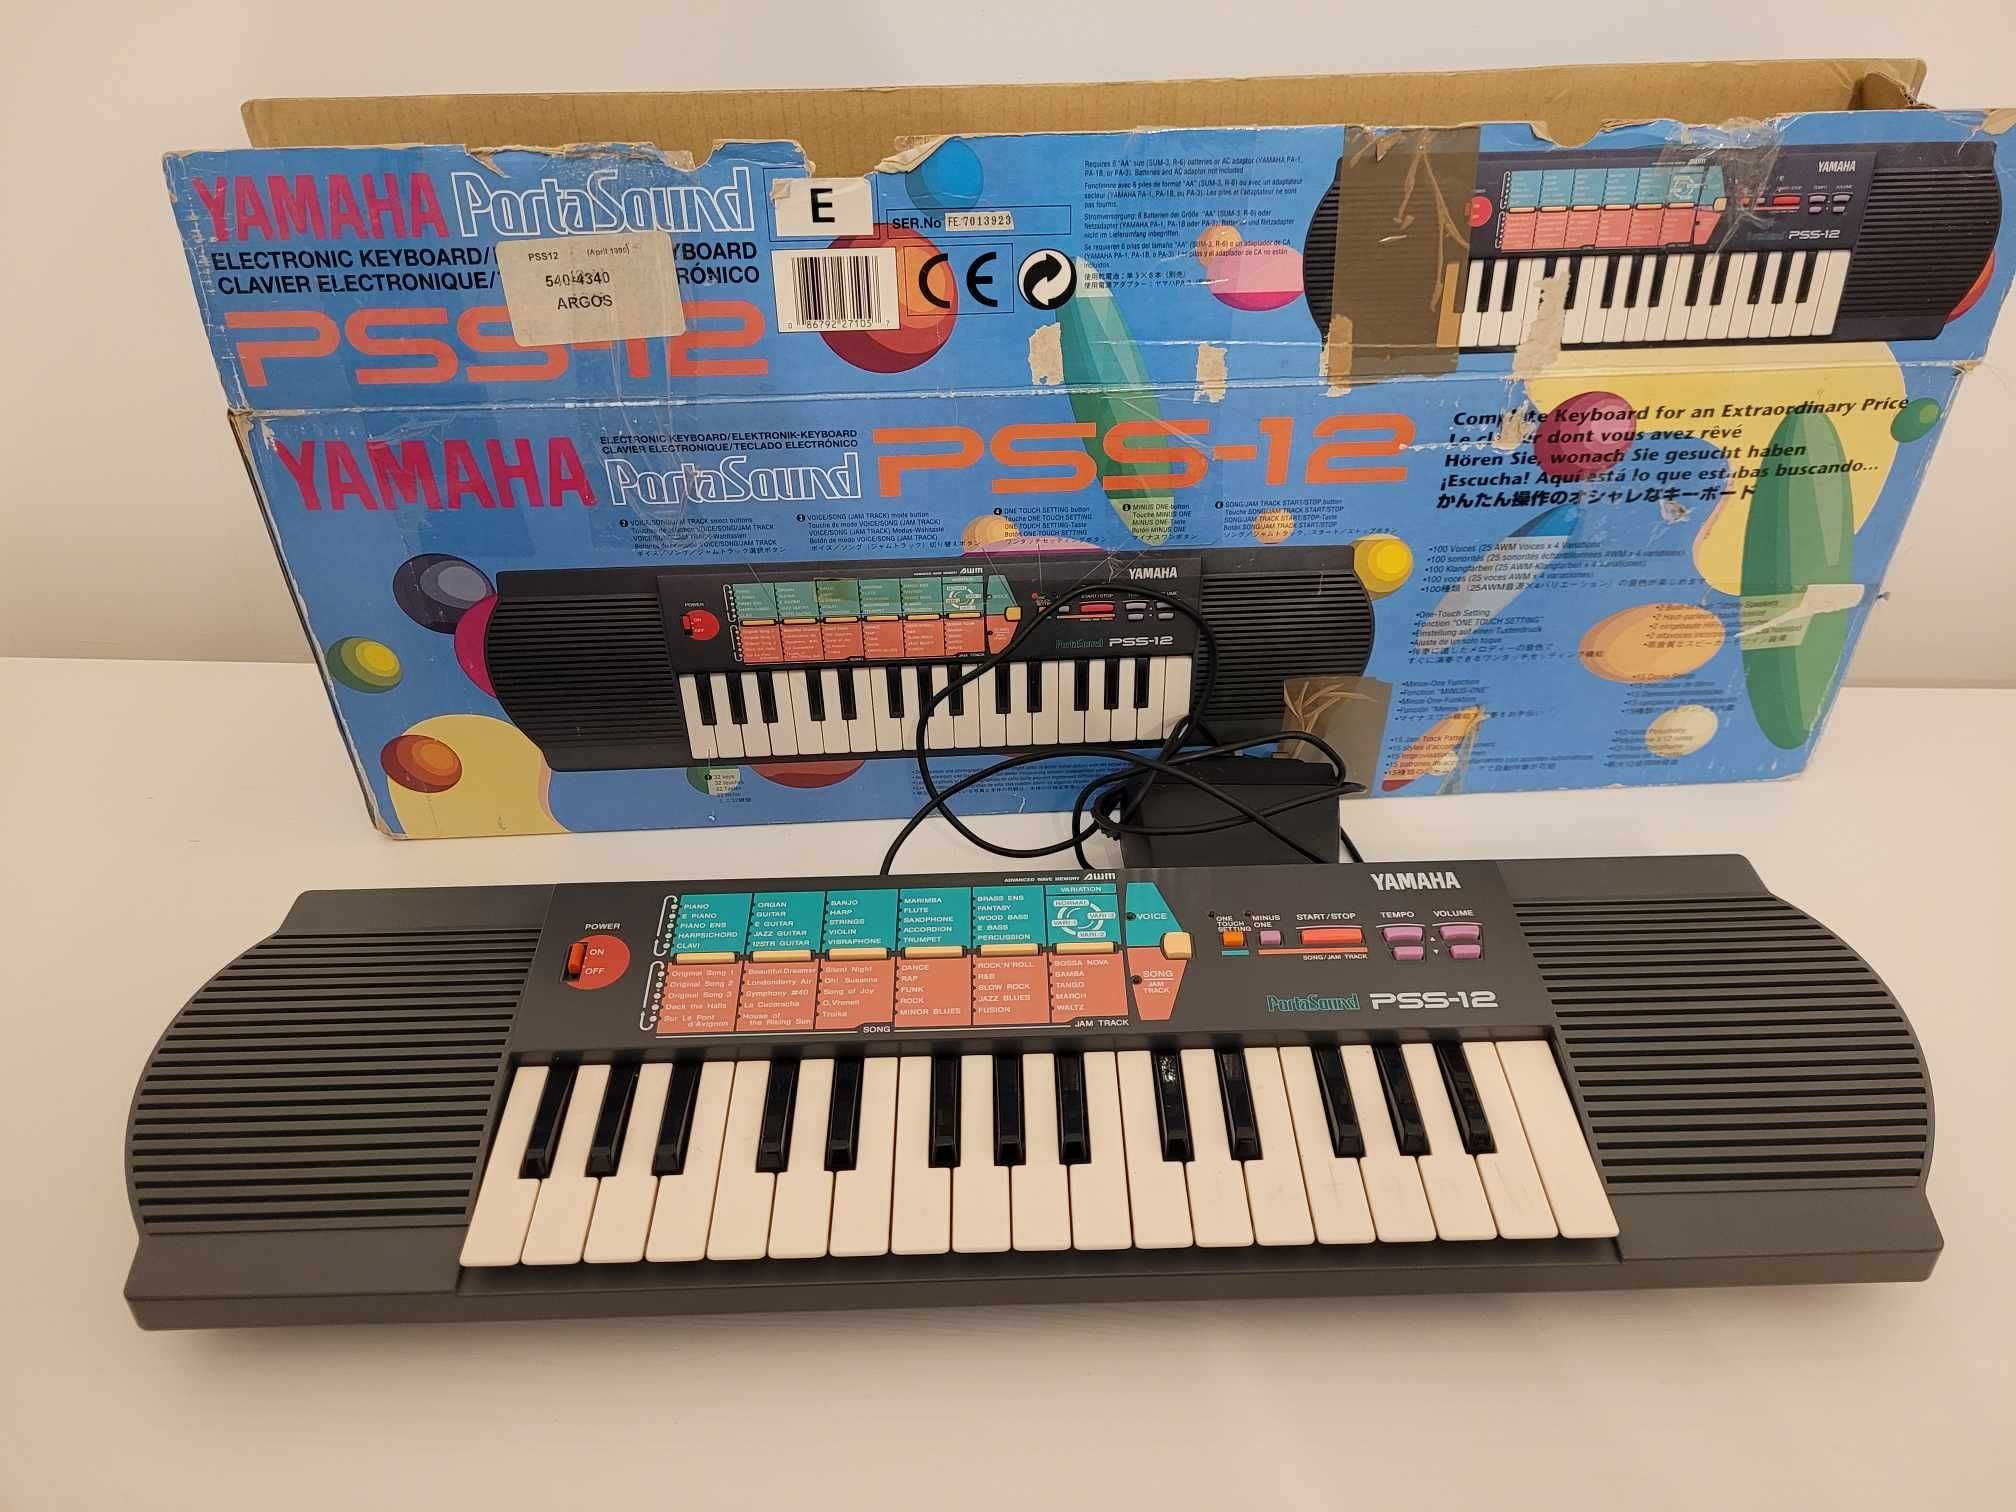 Yamaha Porta Sound PSS-12 Keybord, organy